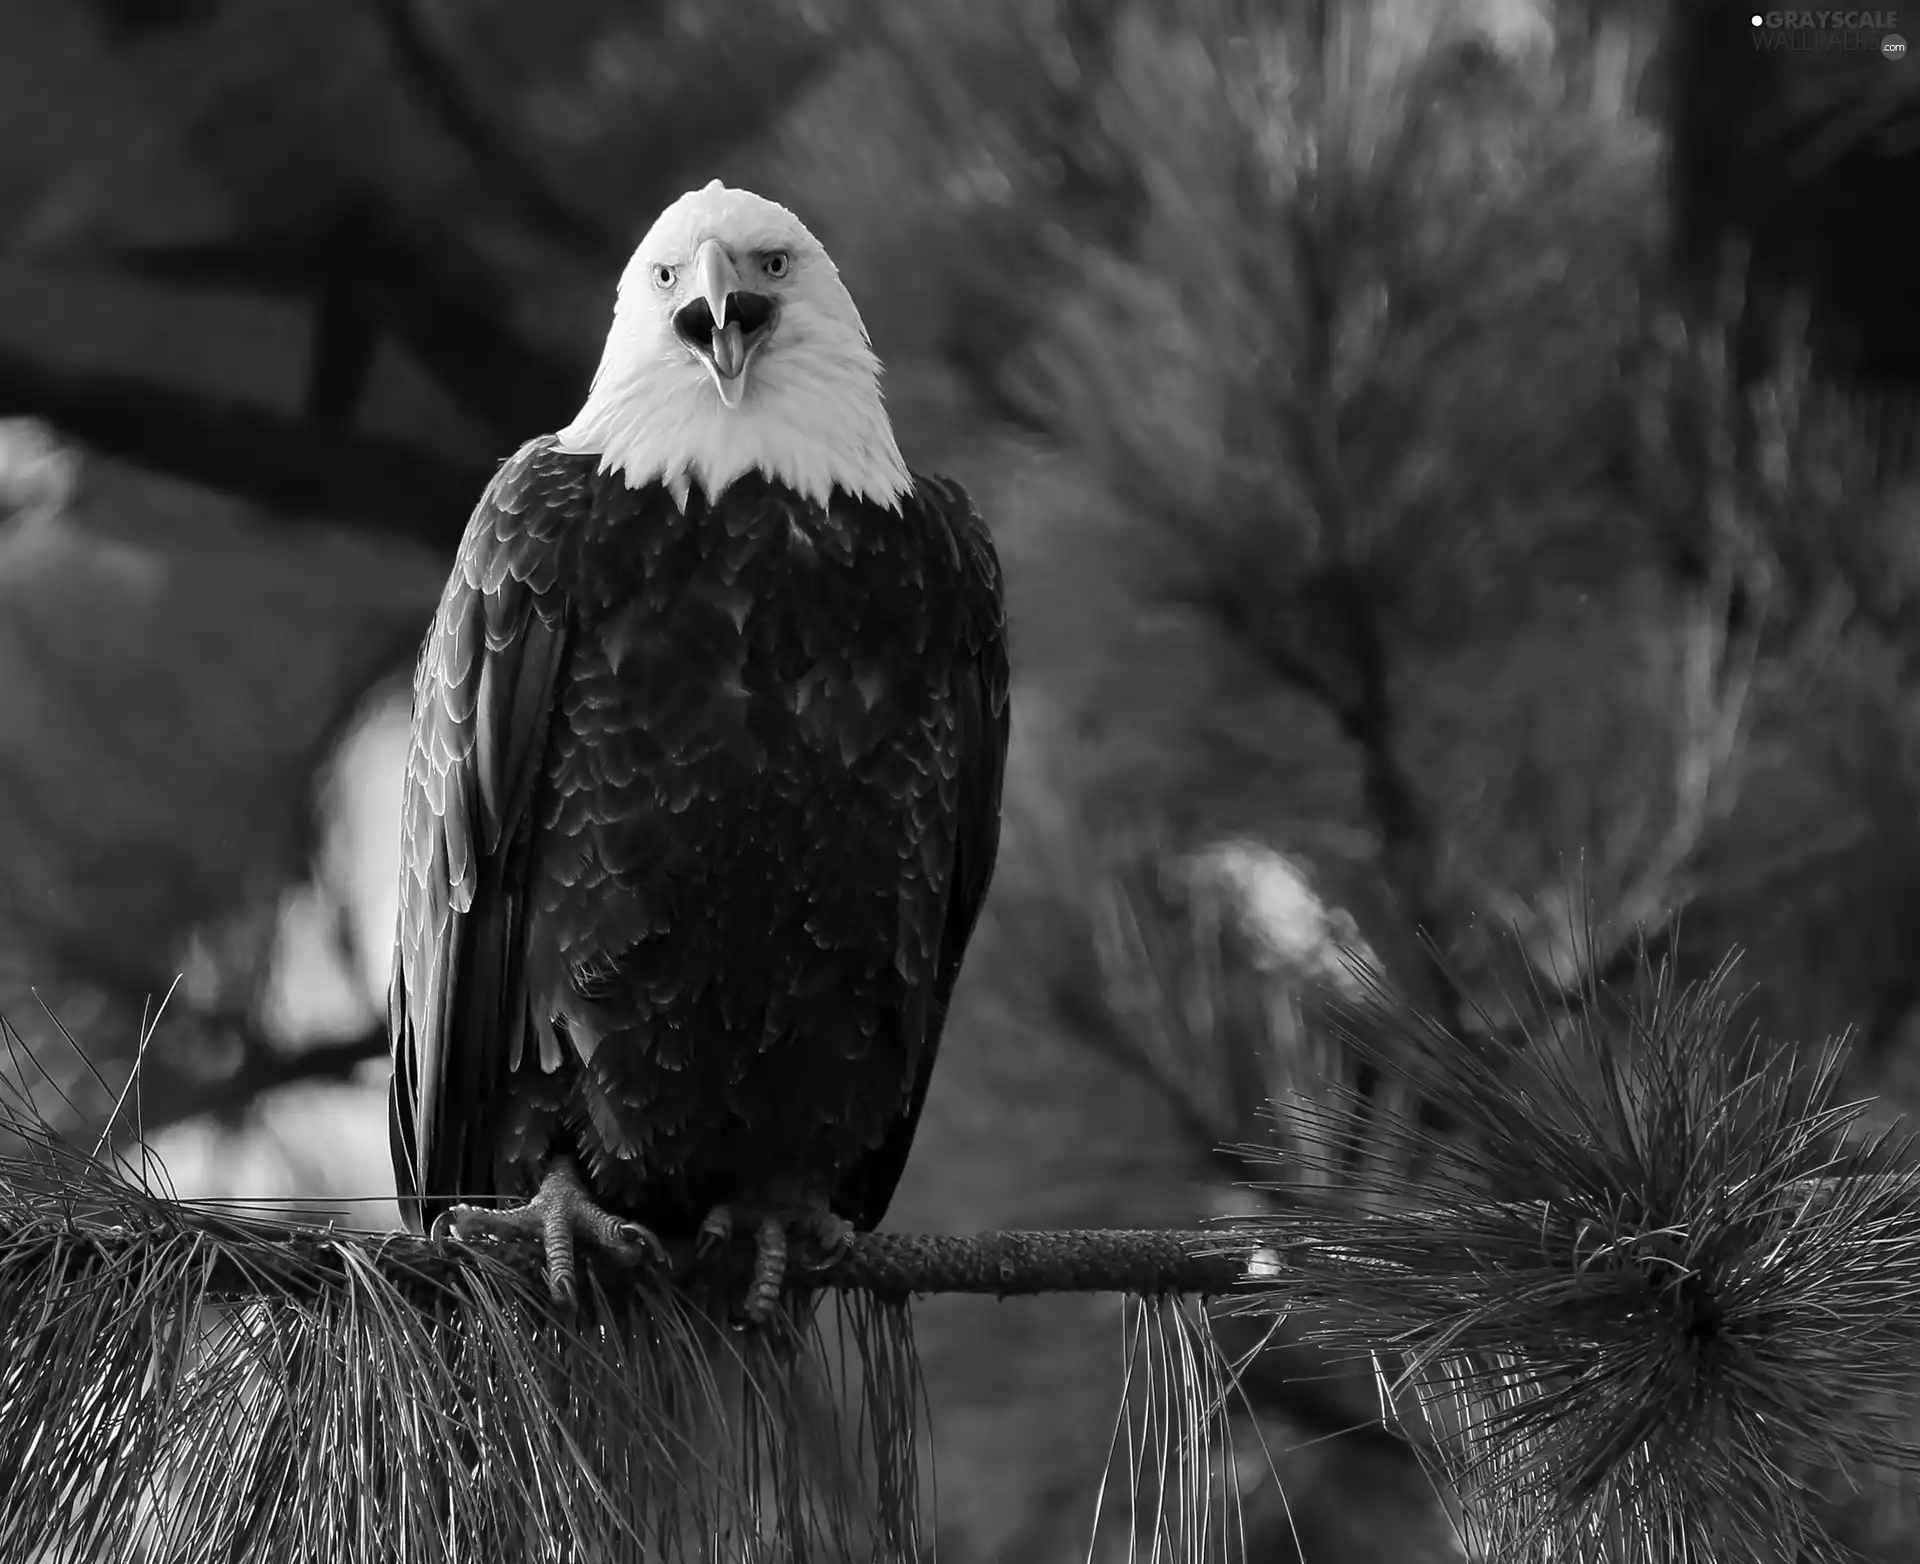 American Bald Eagle, twig